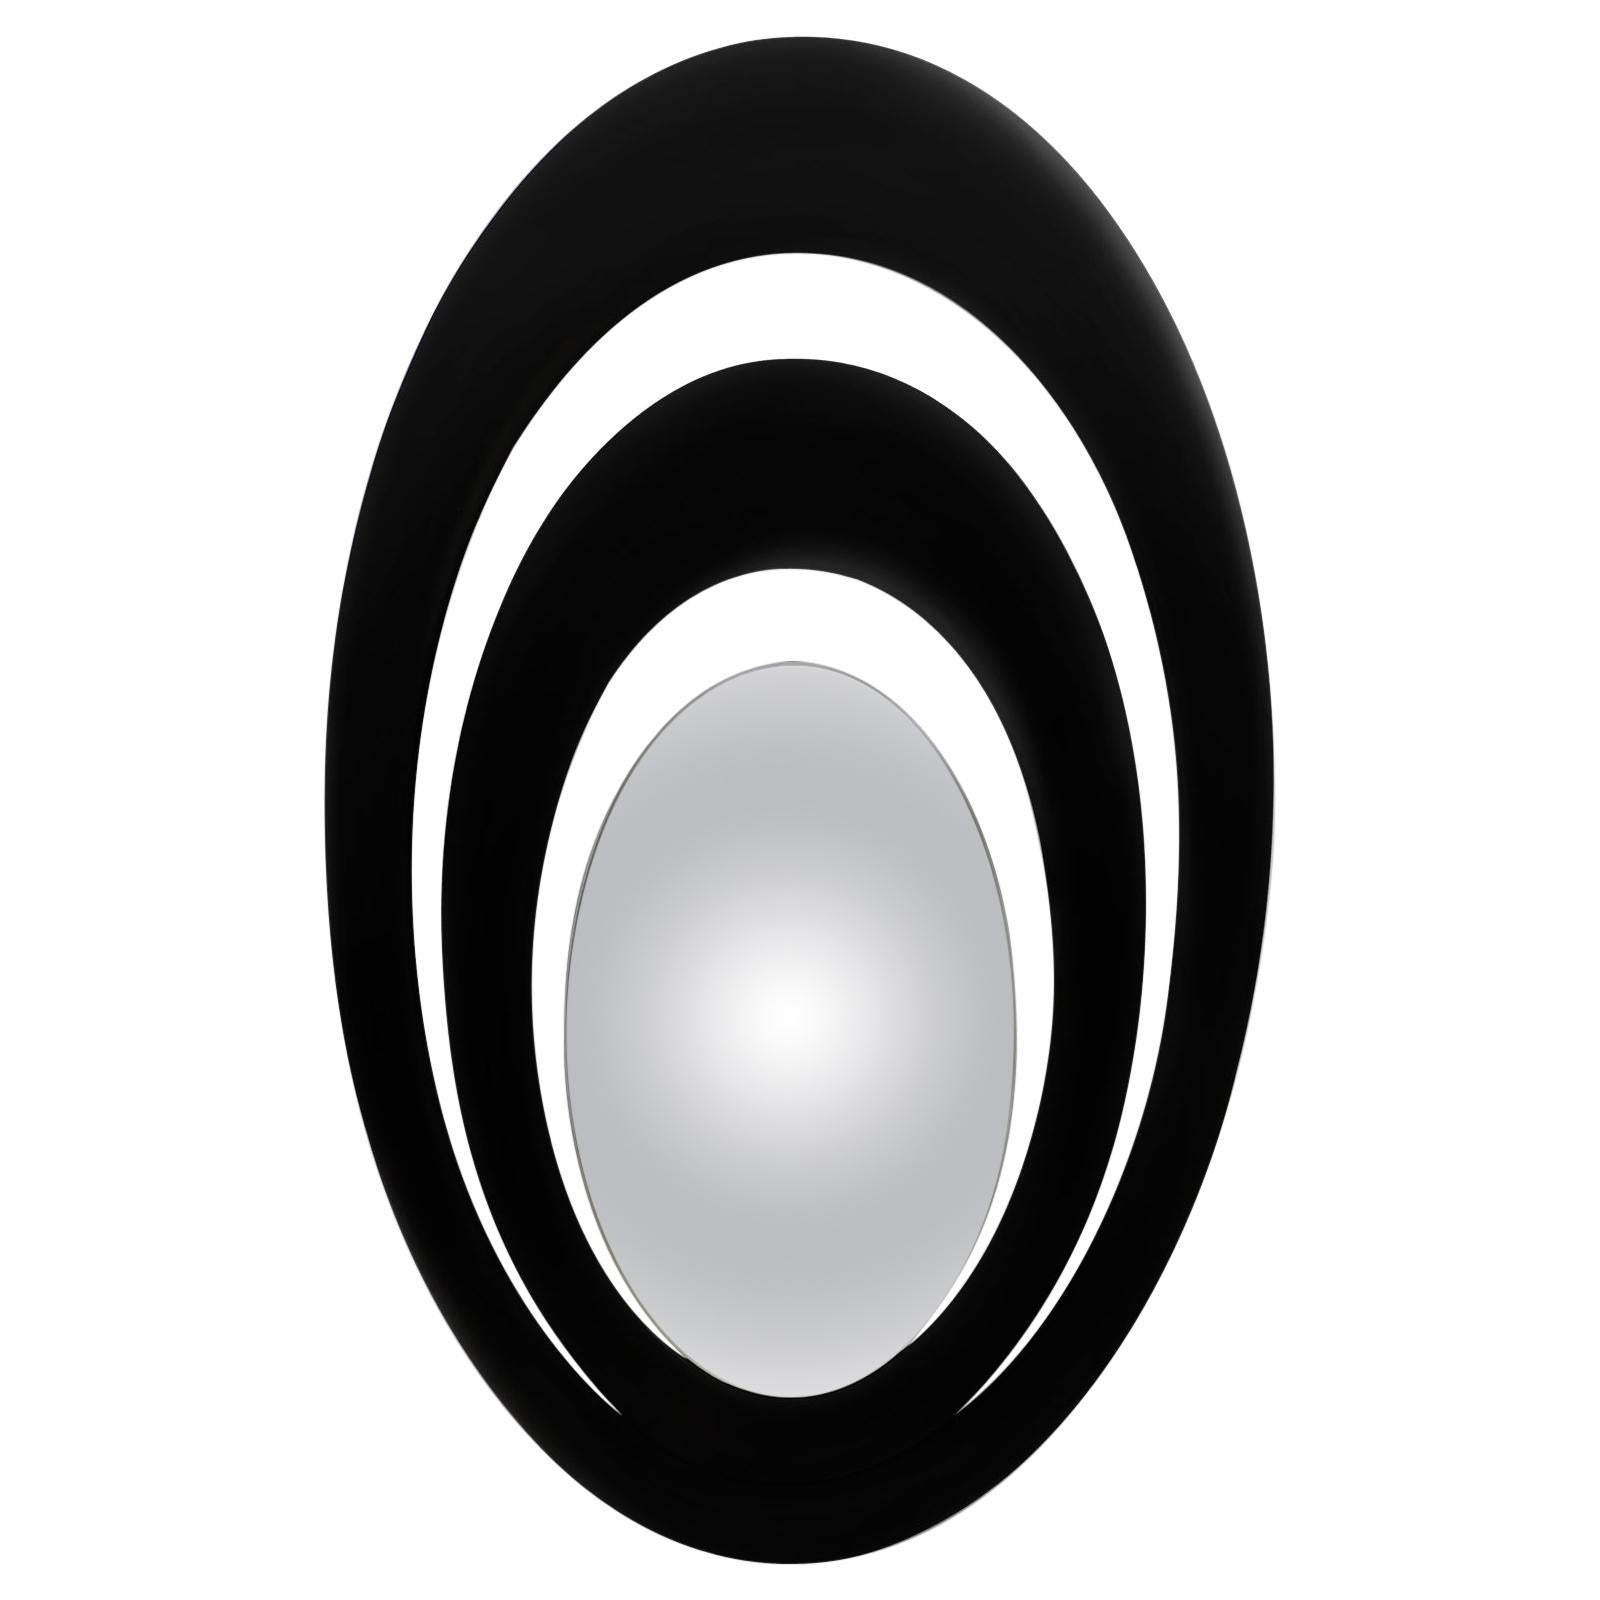 Ovaler Serail-Spiegel in schwarz lackierter Oberfläche